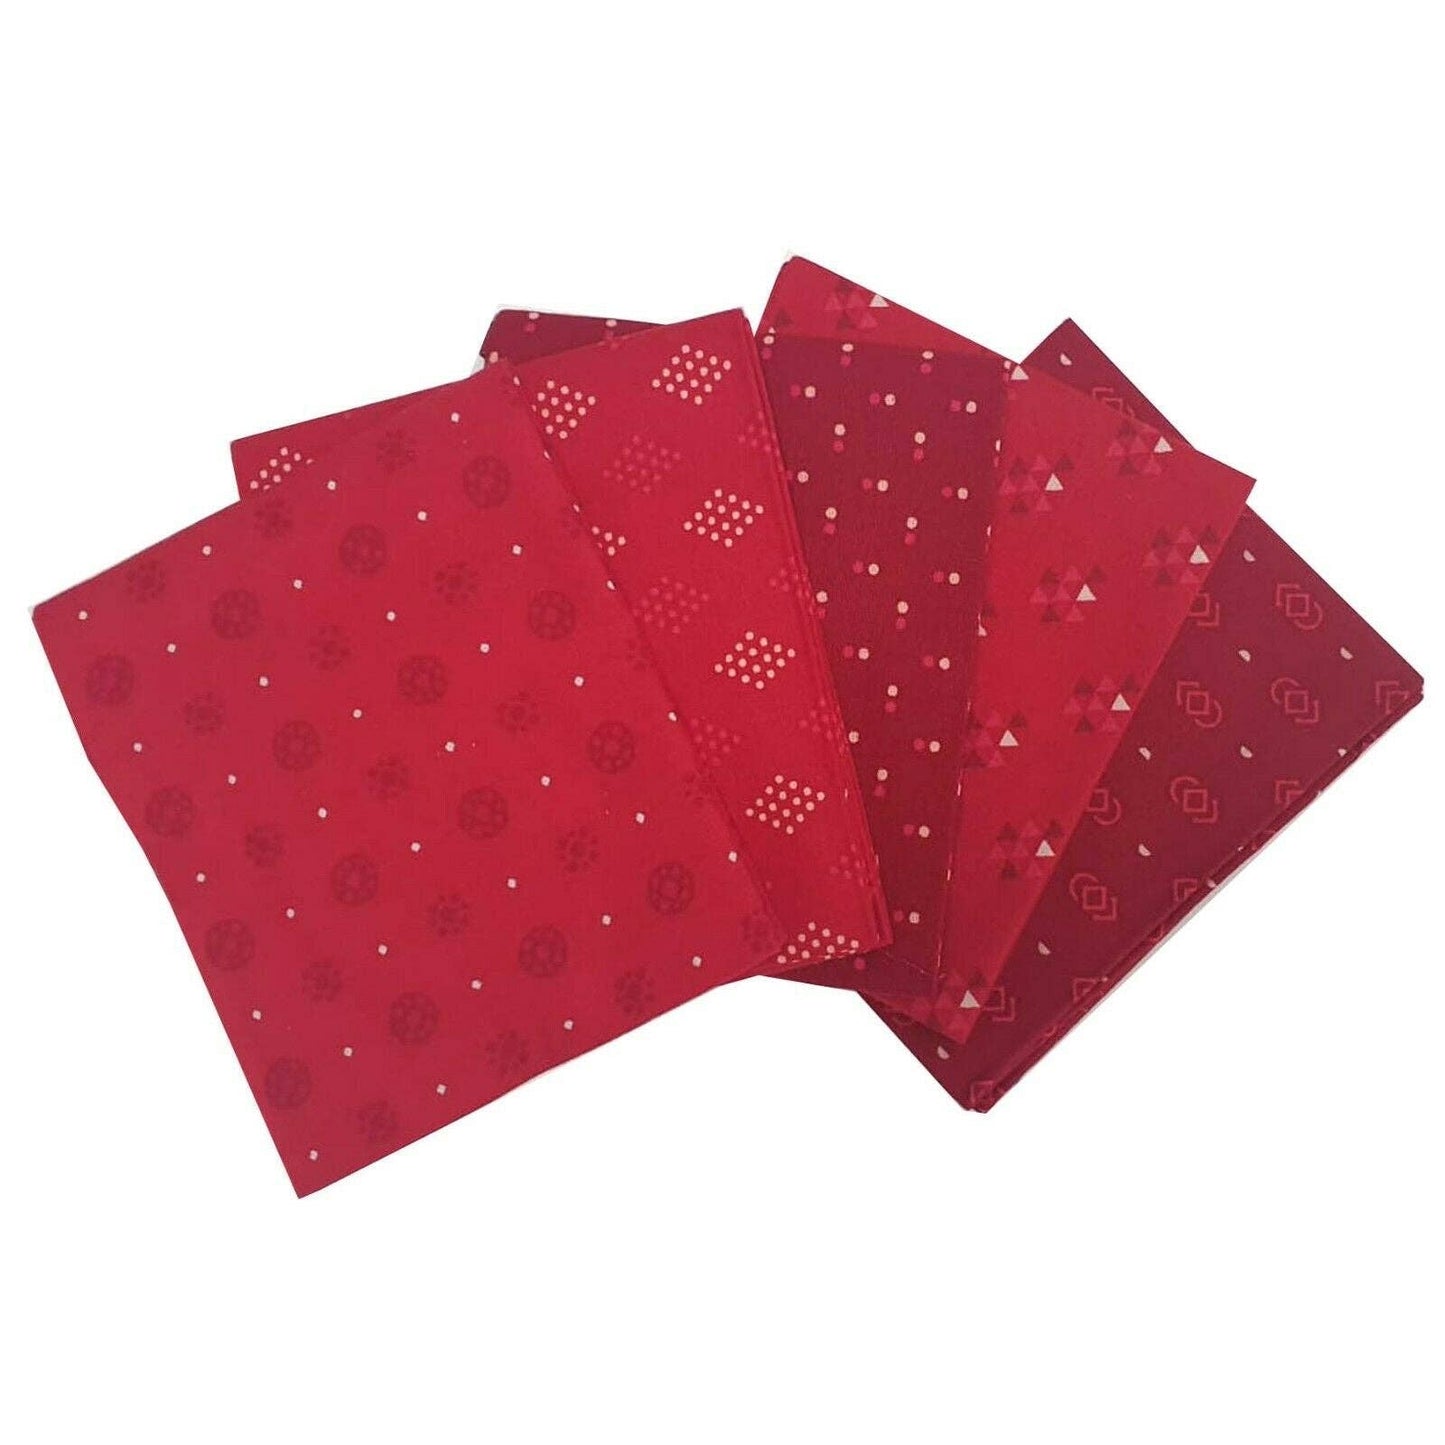 Red Fat Quarter Bundle, Geometric Cotton Fabric Patterned